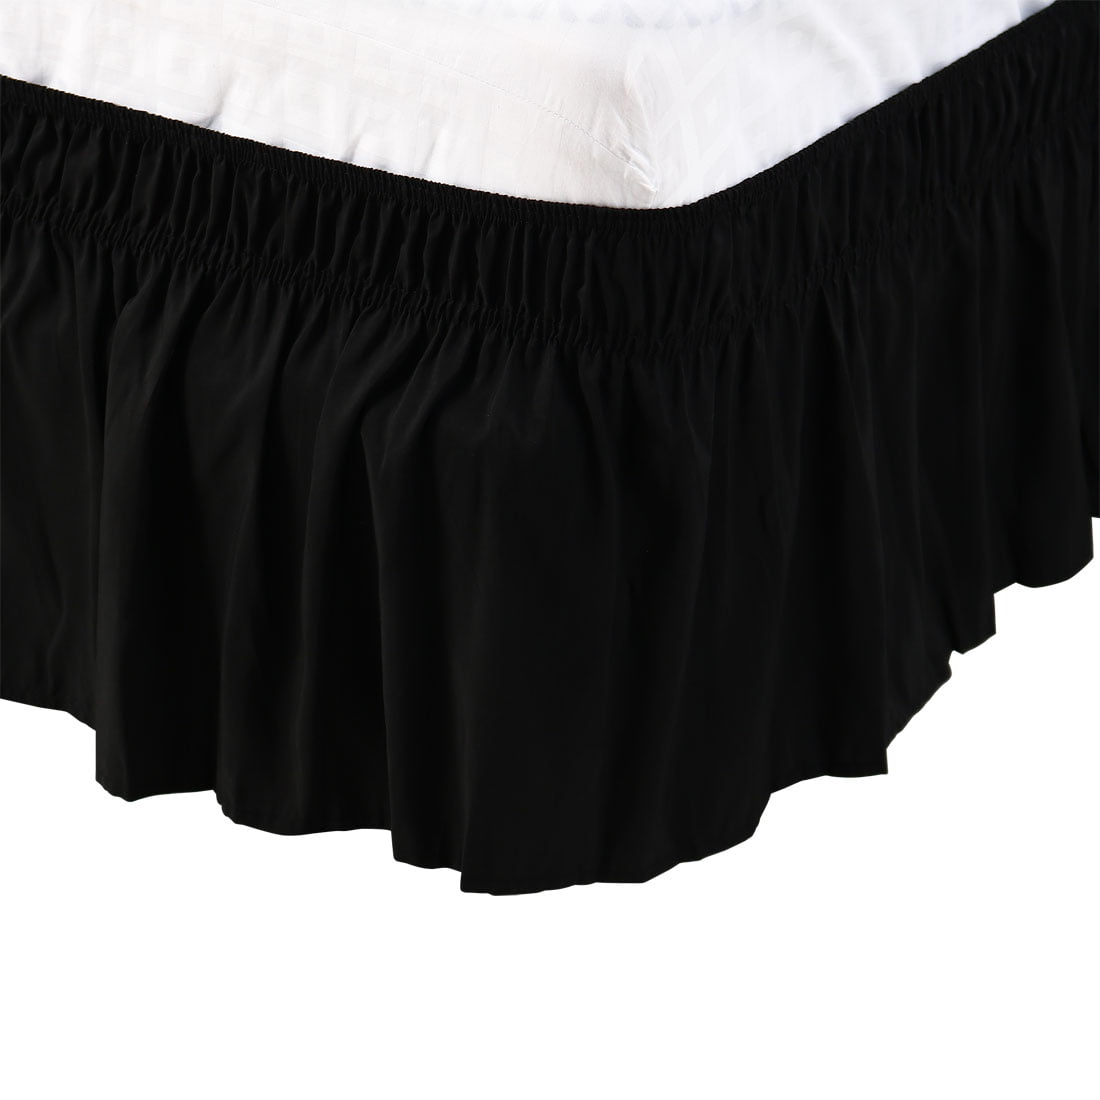 Details about   Bed Skirts Dorm Room Ruffle Dorm Bedskirt Twin-XL-46" Drop Mirofiber All Color